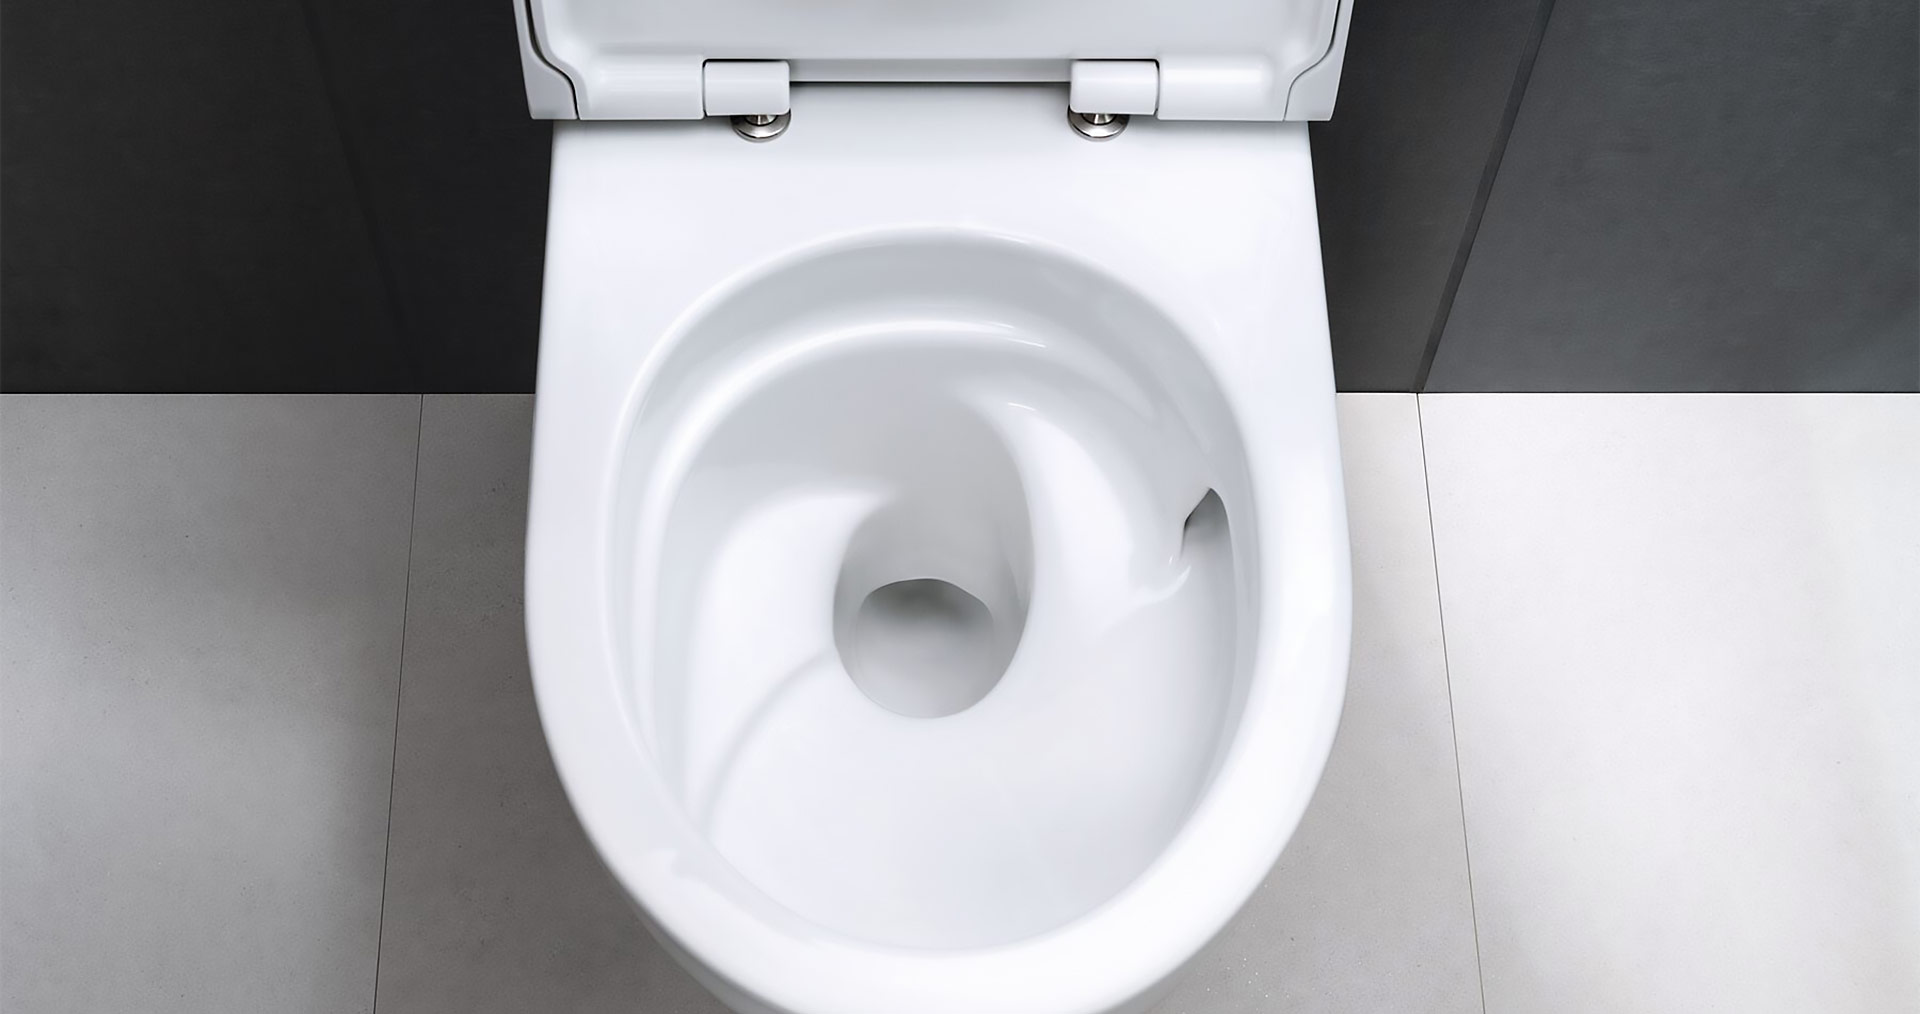 Geberit Acanto toilet featuring enhanced TurboFlush technology, surrounded by modern, minimalist tiles